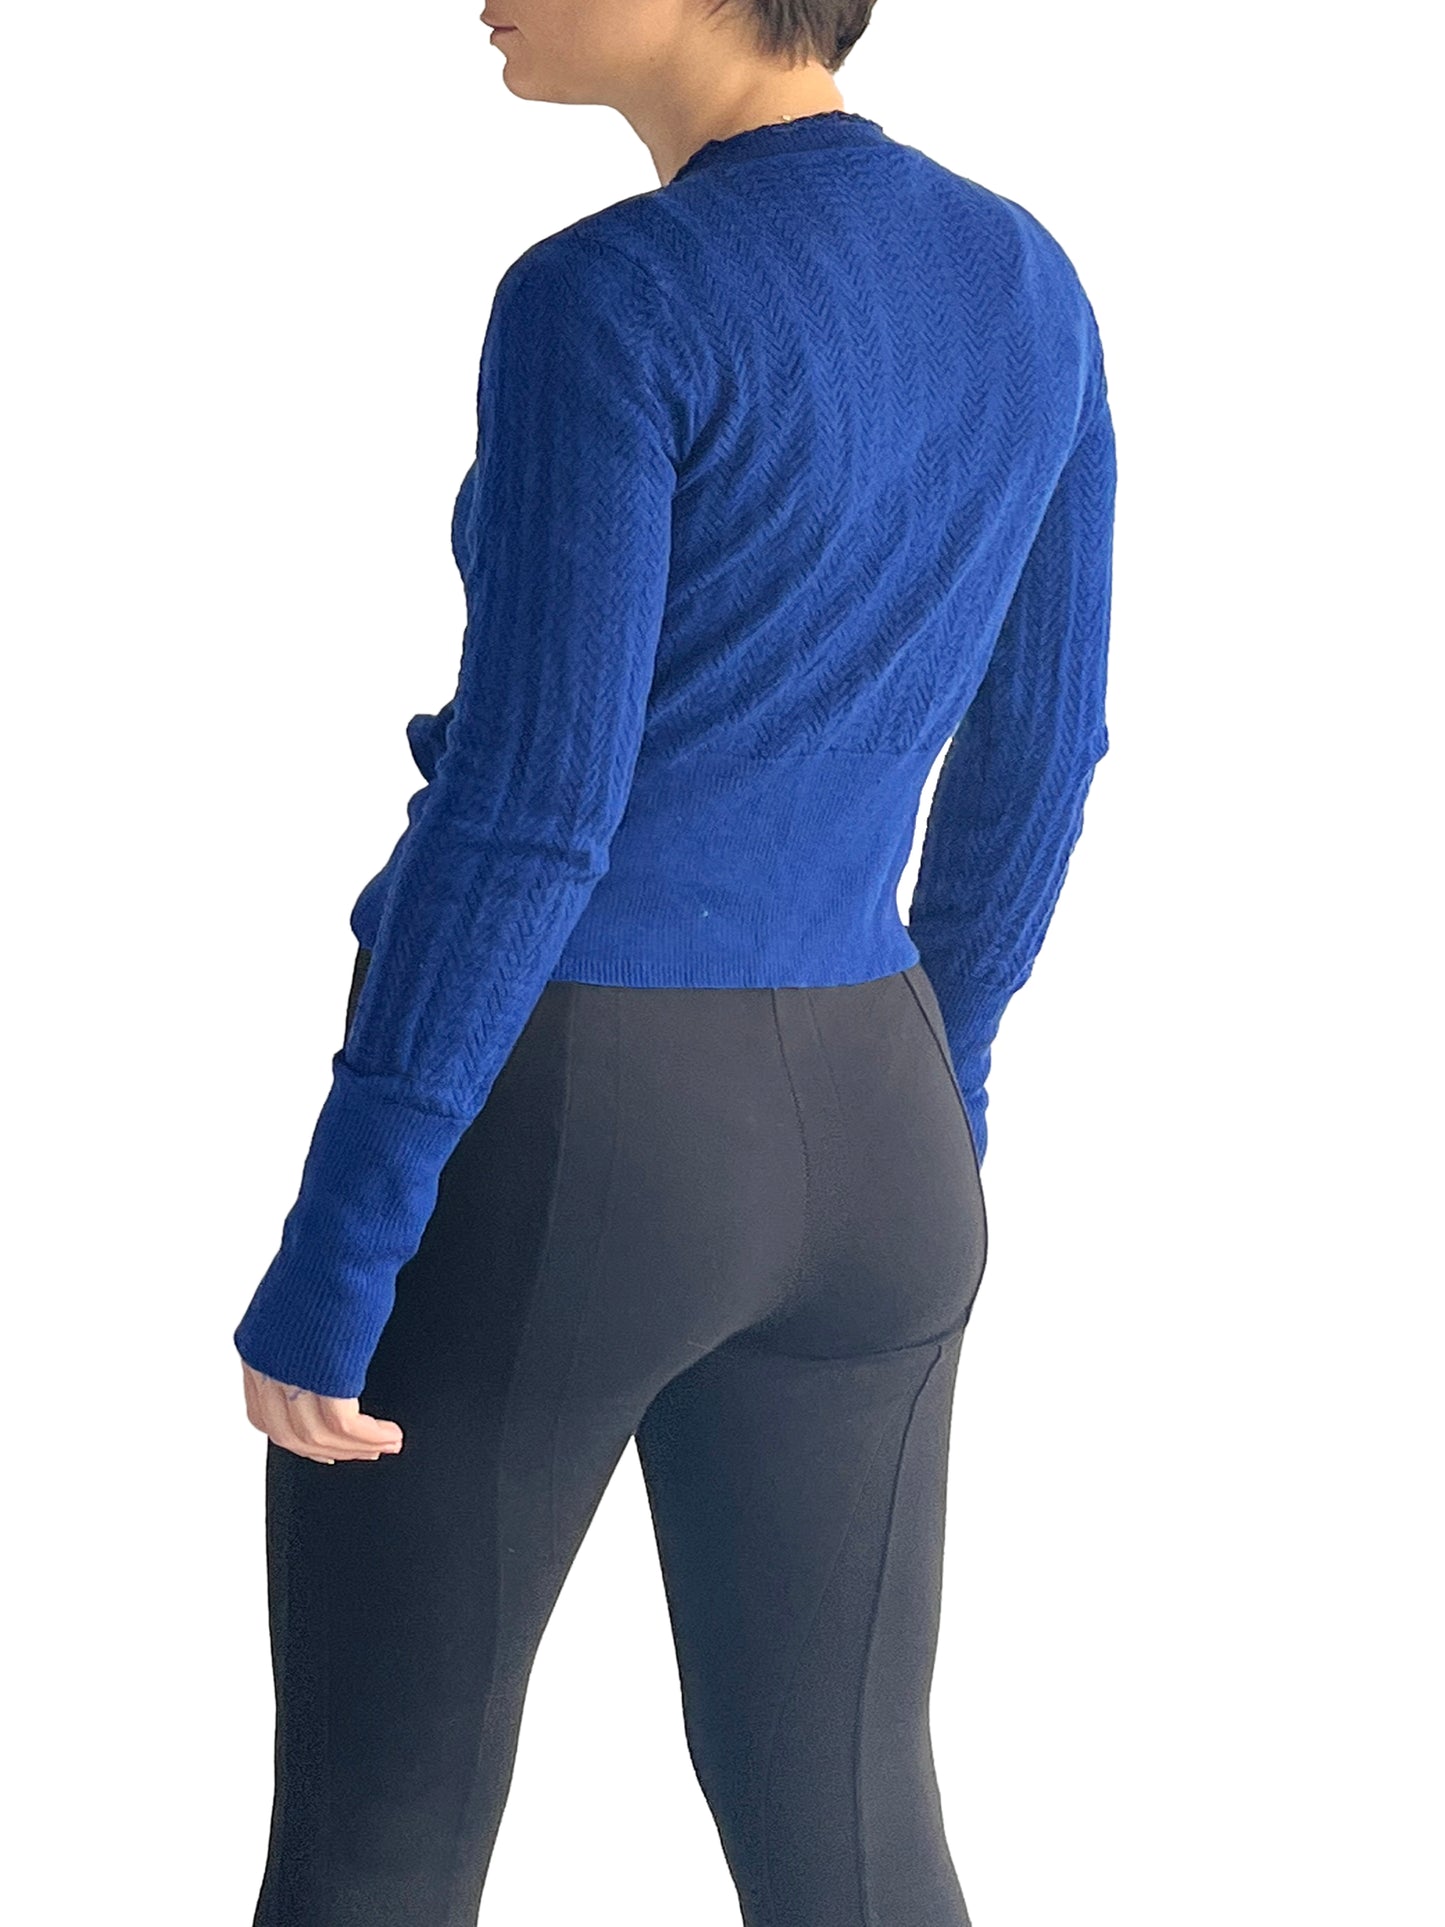 Karen Miller Top Sweater Royal Blue Size 3 SKU 000043